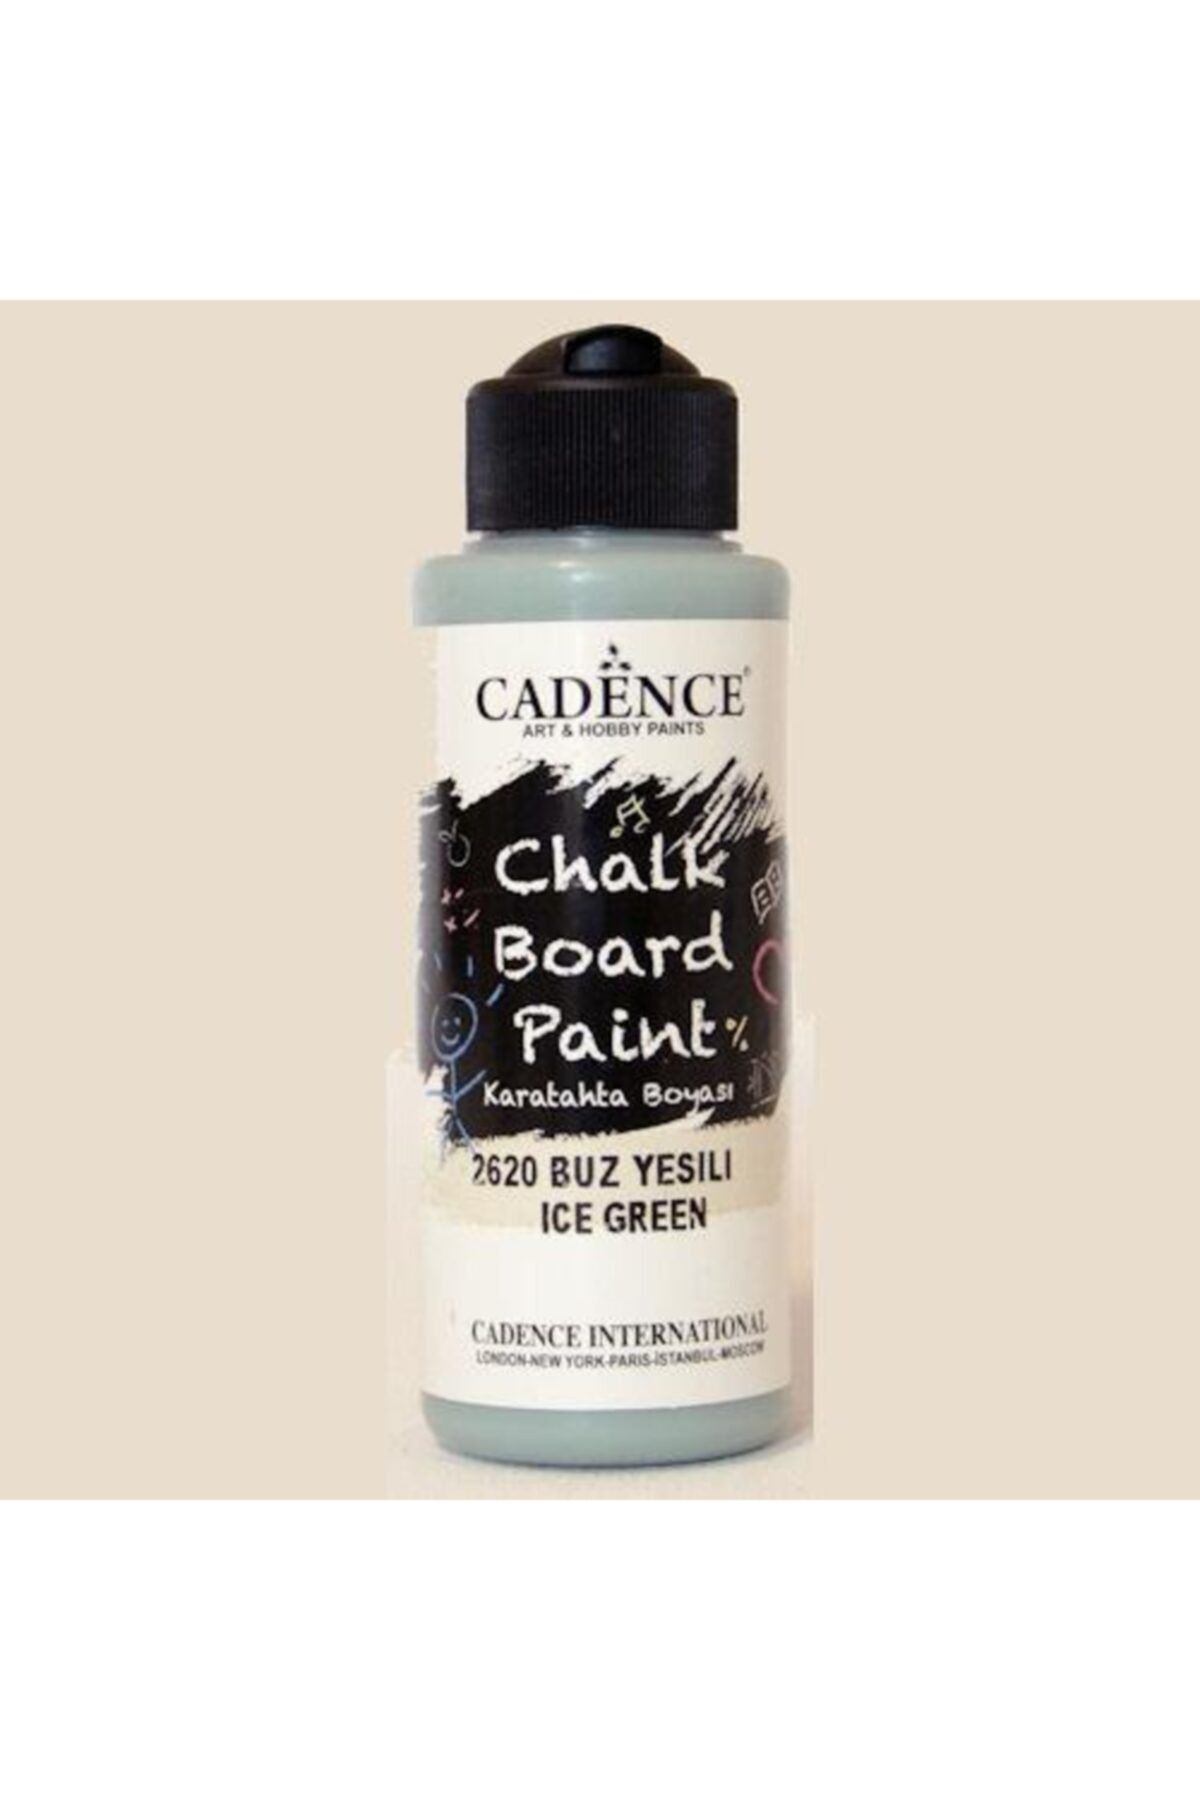 Cadence Buz Yeşili Chalkboard Paint 120ml Kara Tahta Boyası 2620